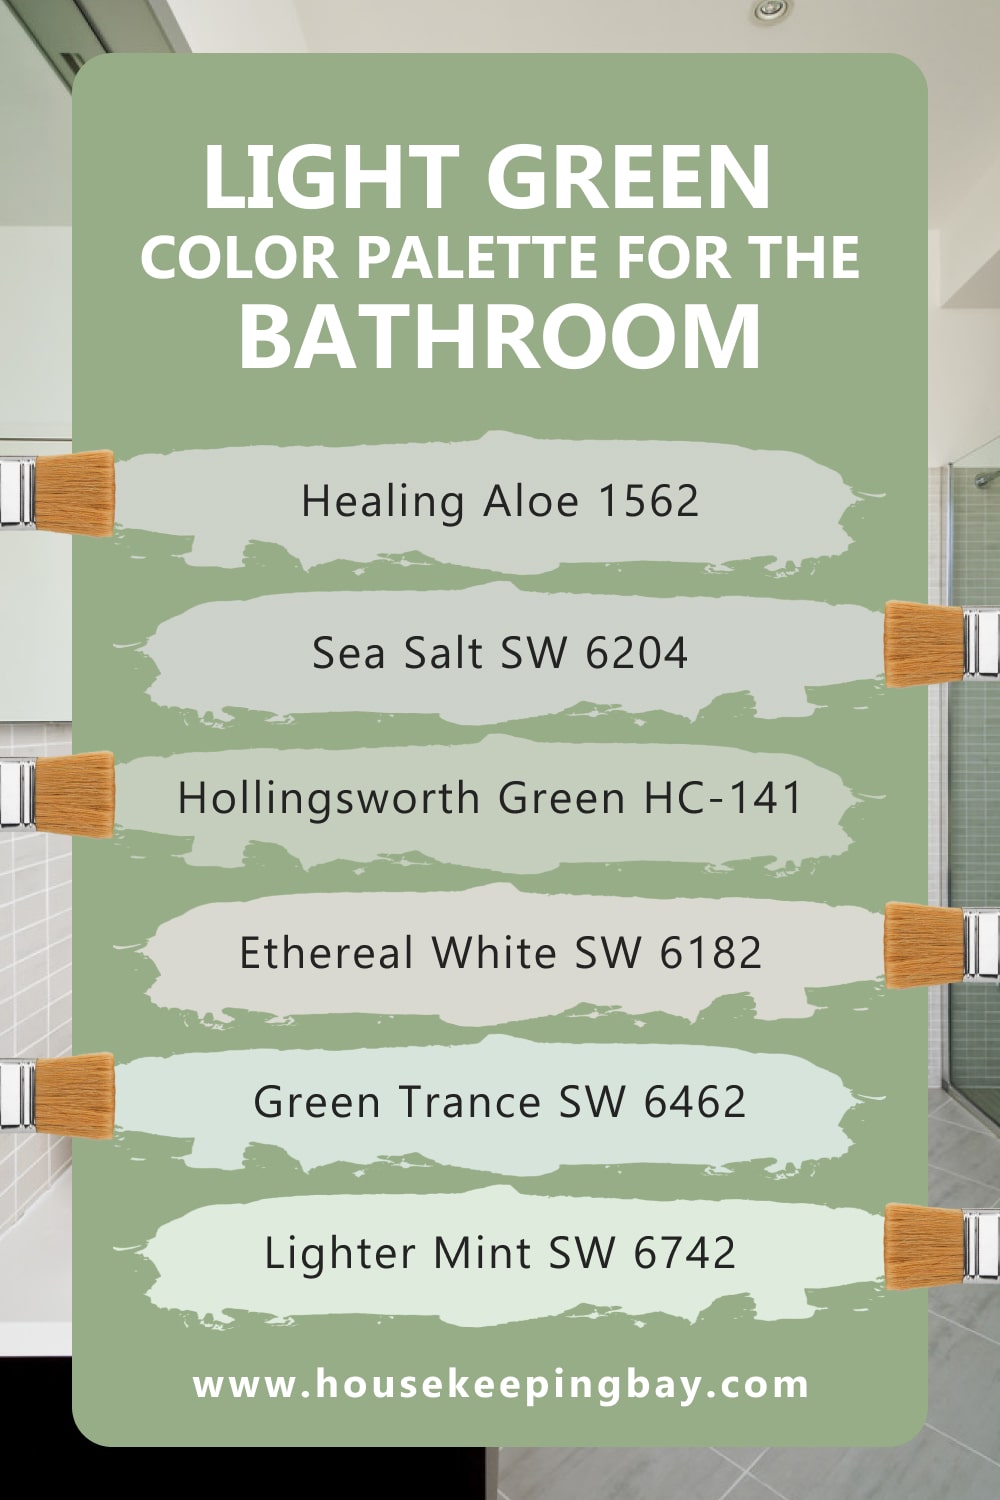 Light Green Color Palette for the Bathroom